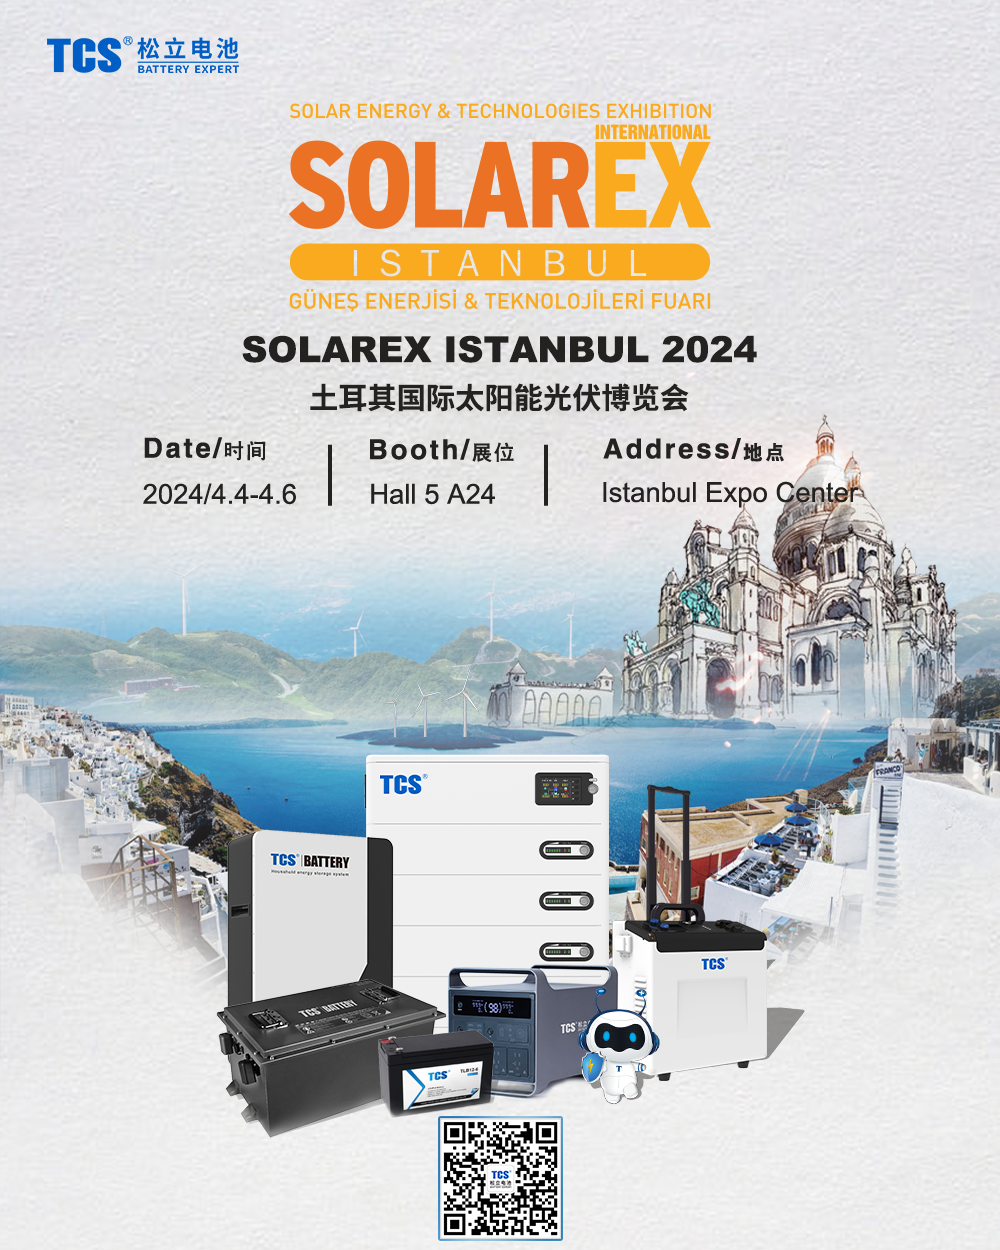 Solarex Istanbul 2024 Hall 5 A24